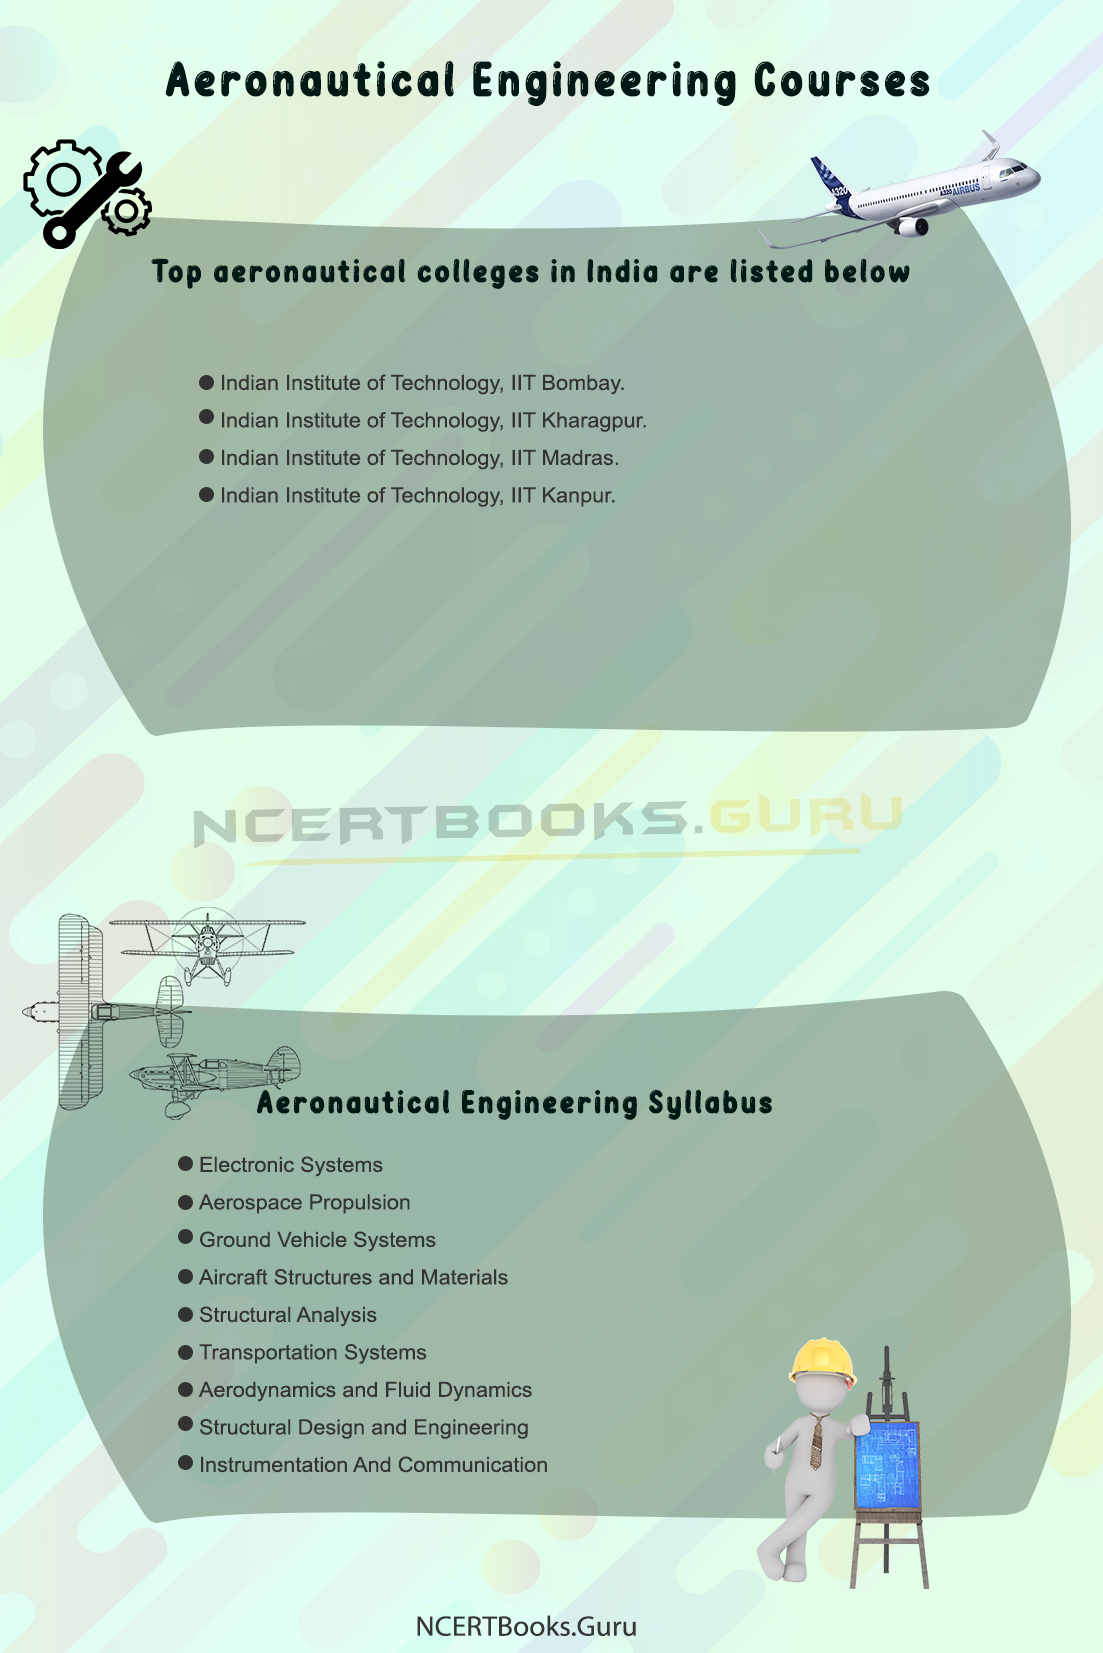 Aeronautical Engineering Courses